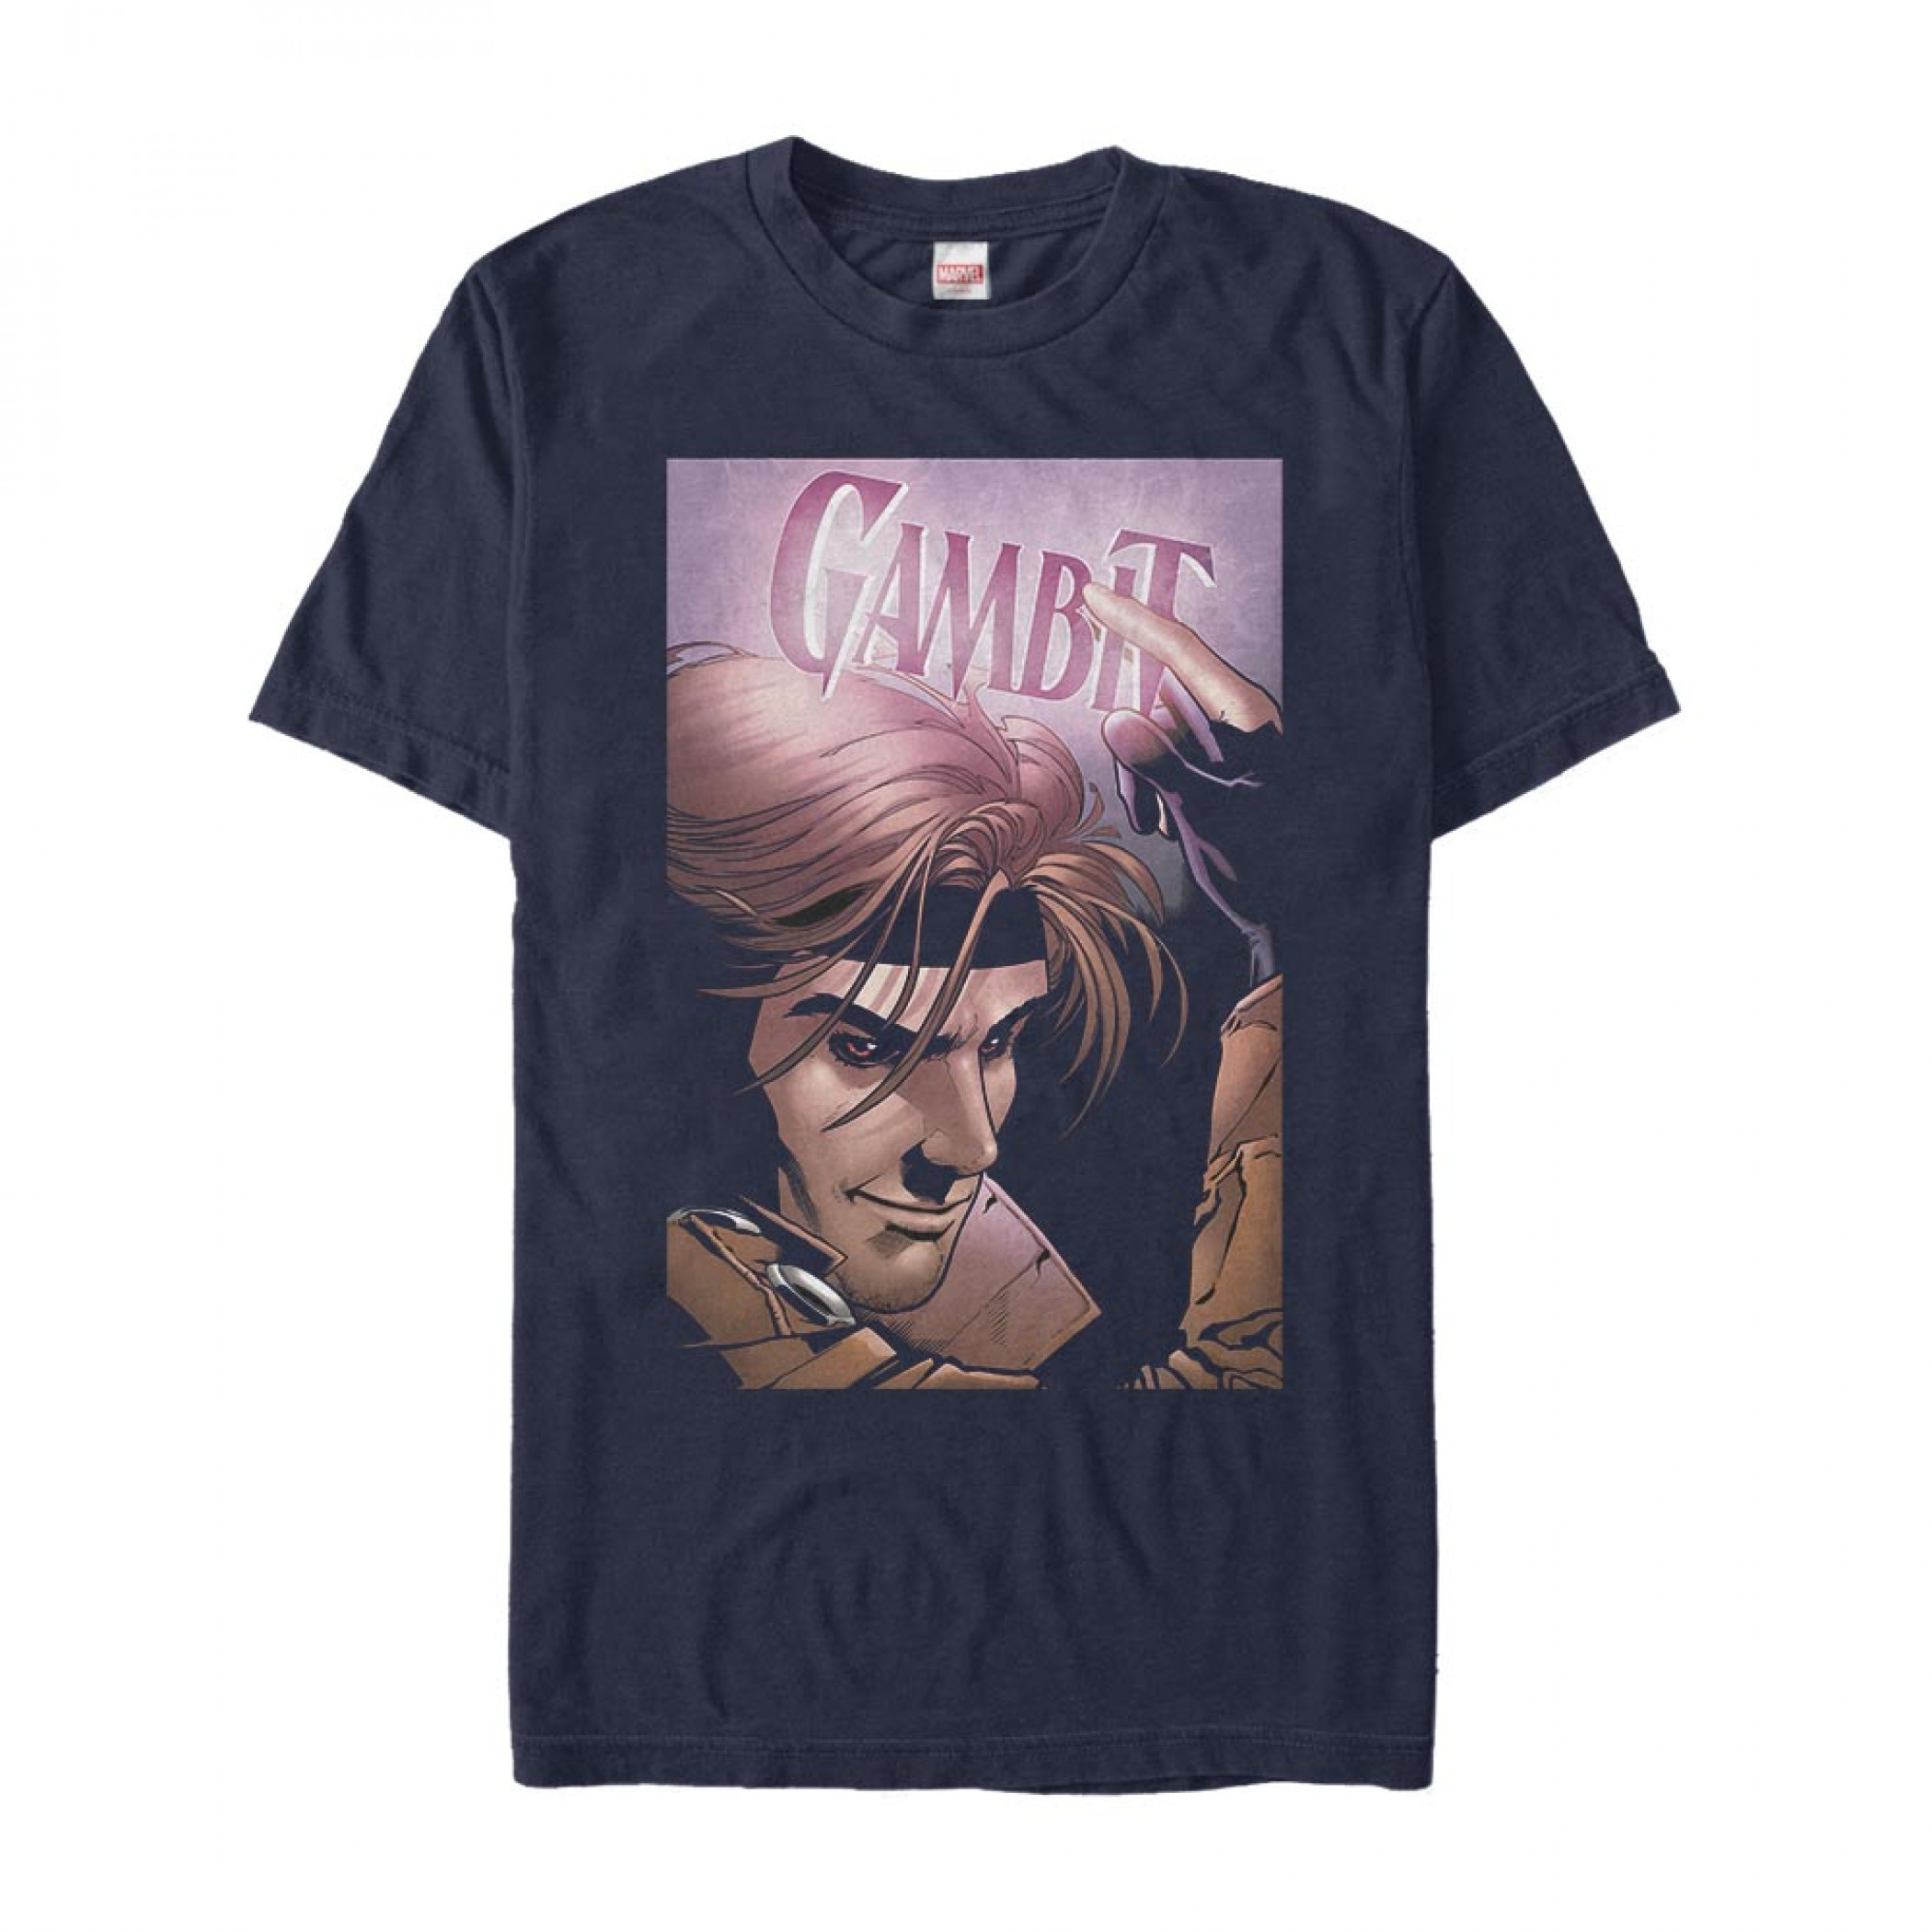 X-Men Gambit T-Shirt